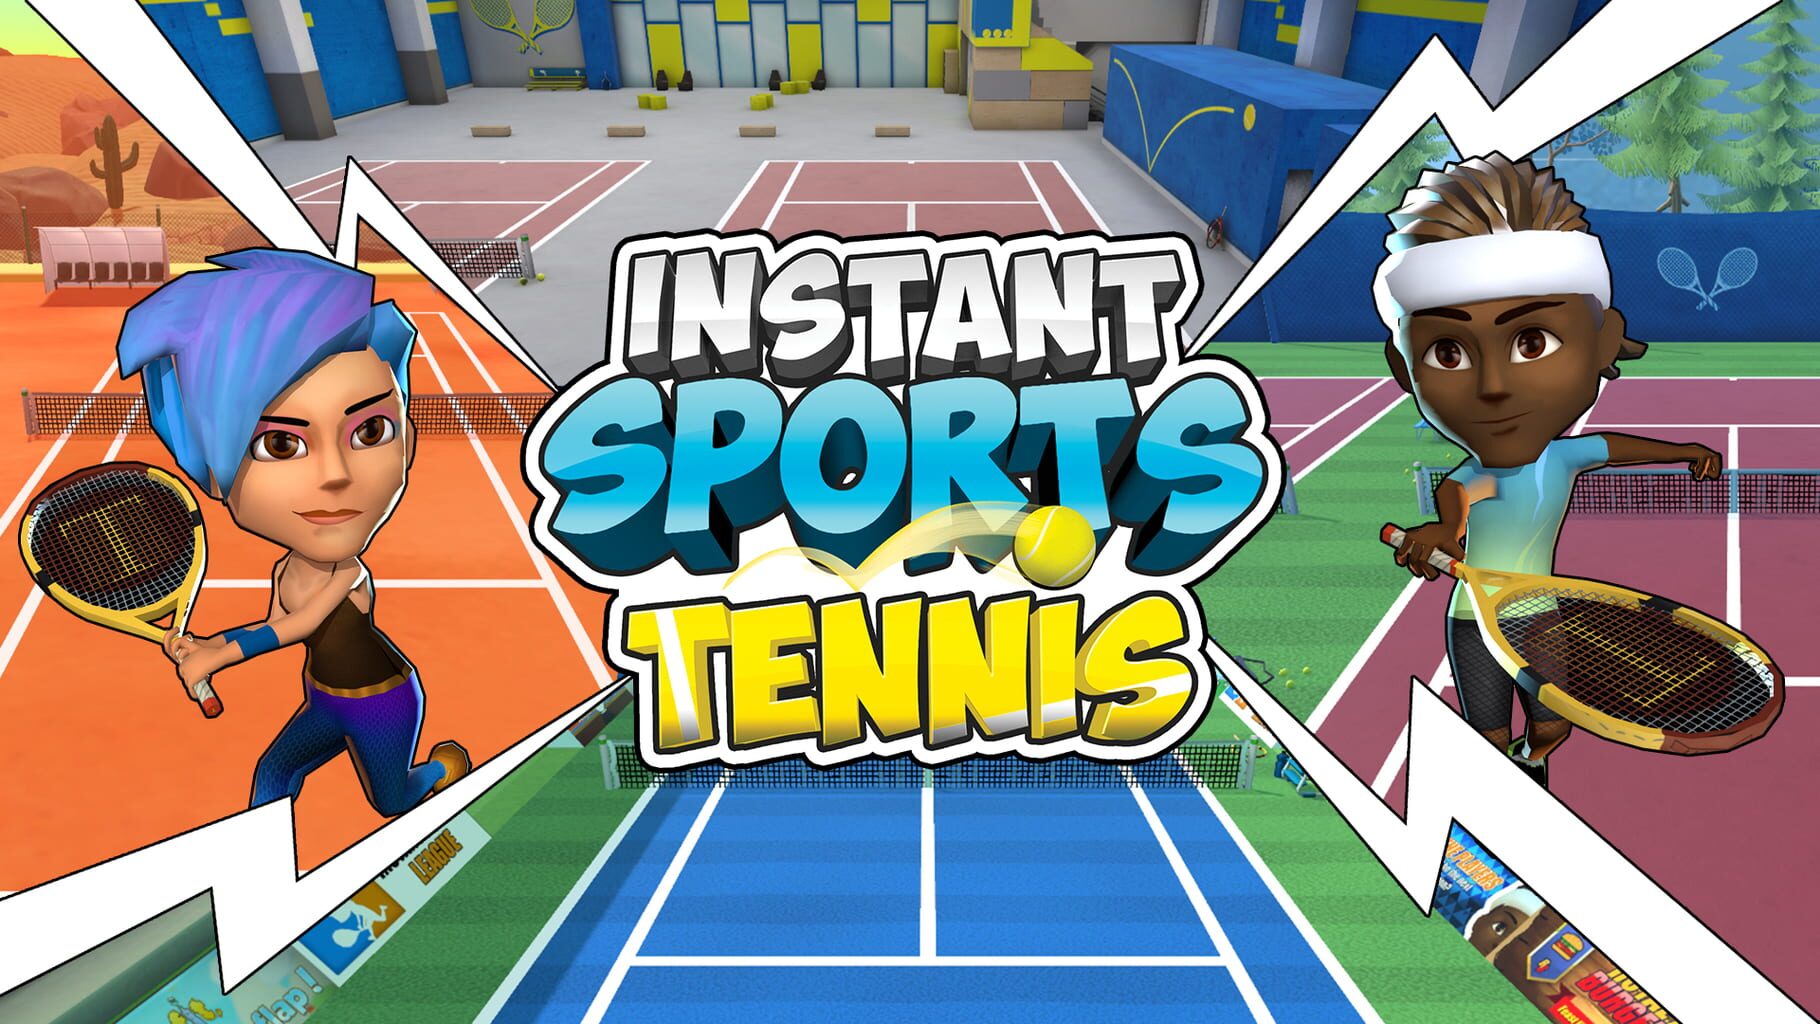 Instant Sports Tennis artwork